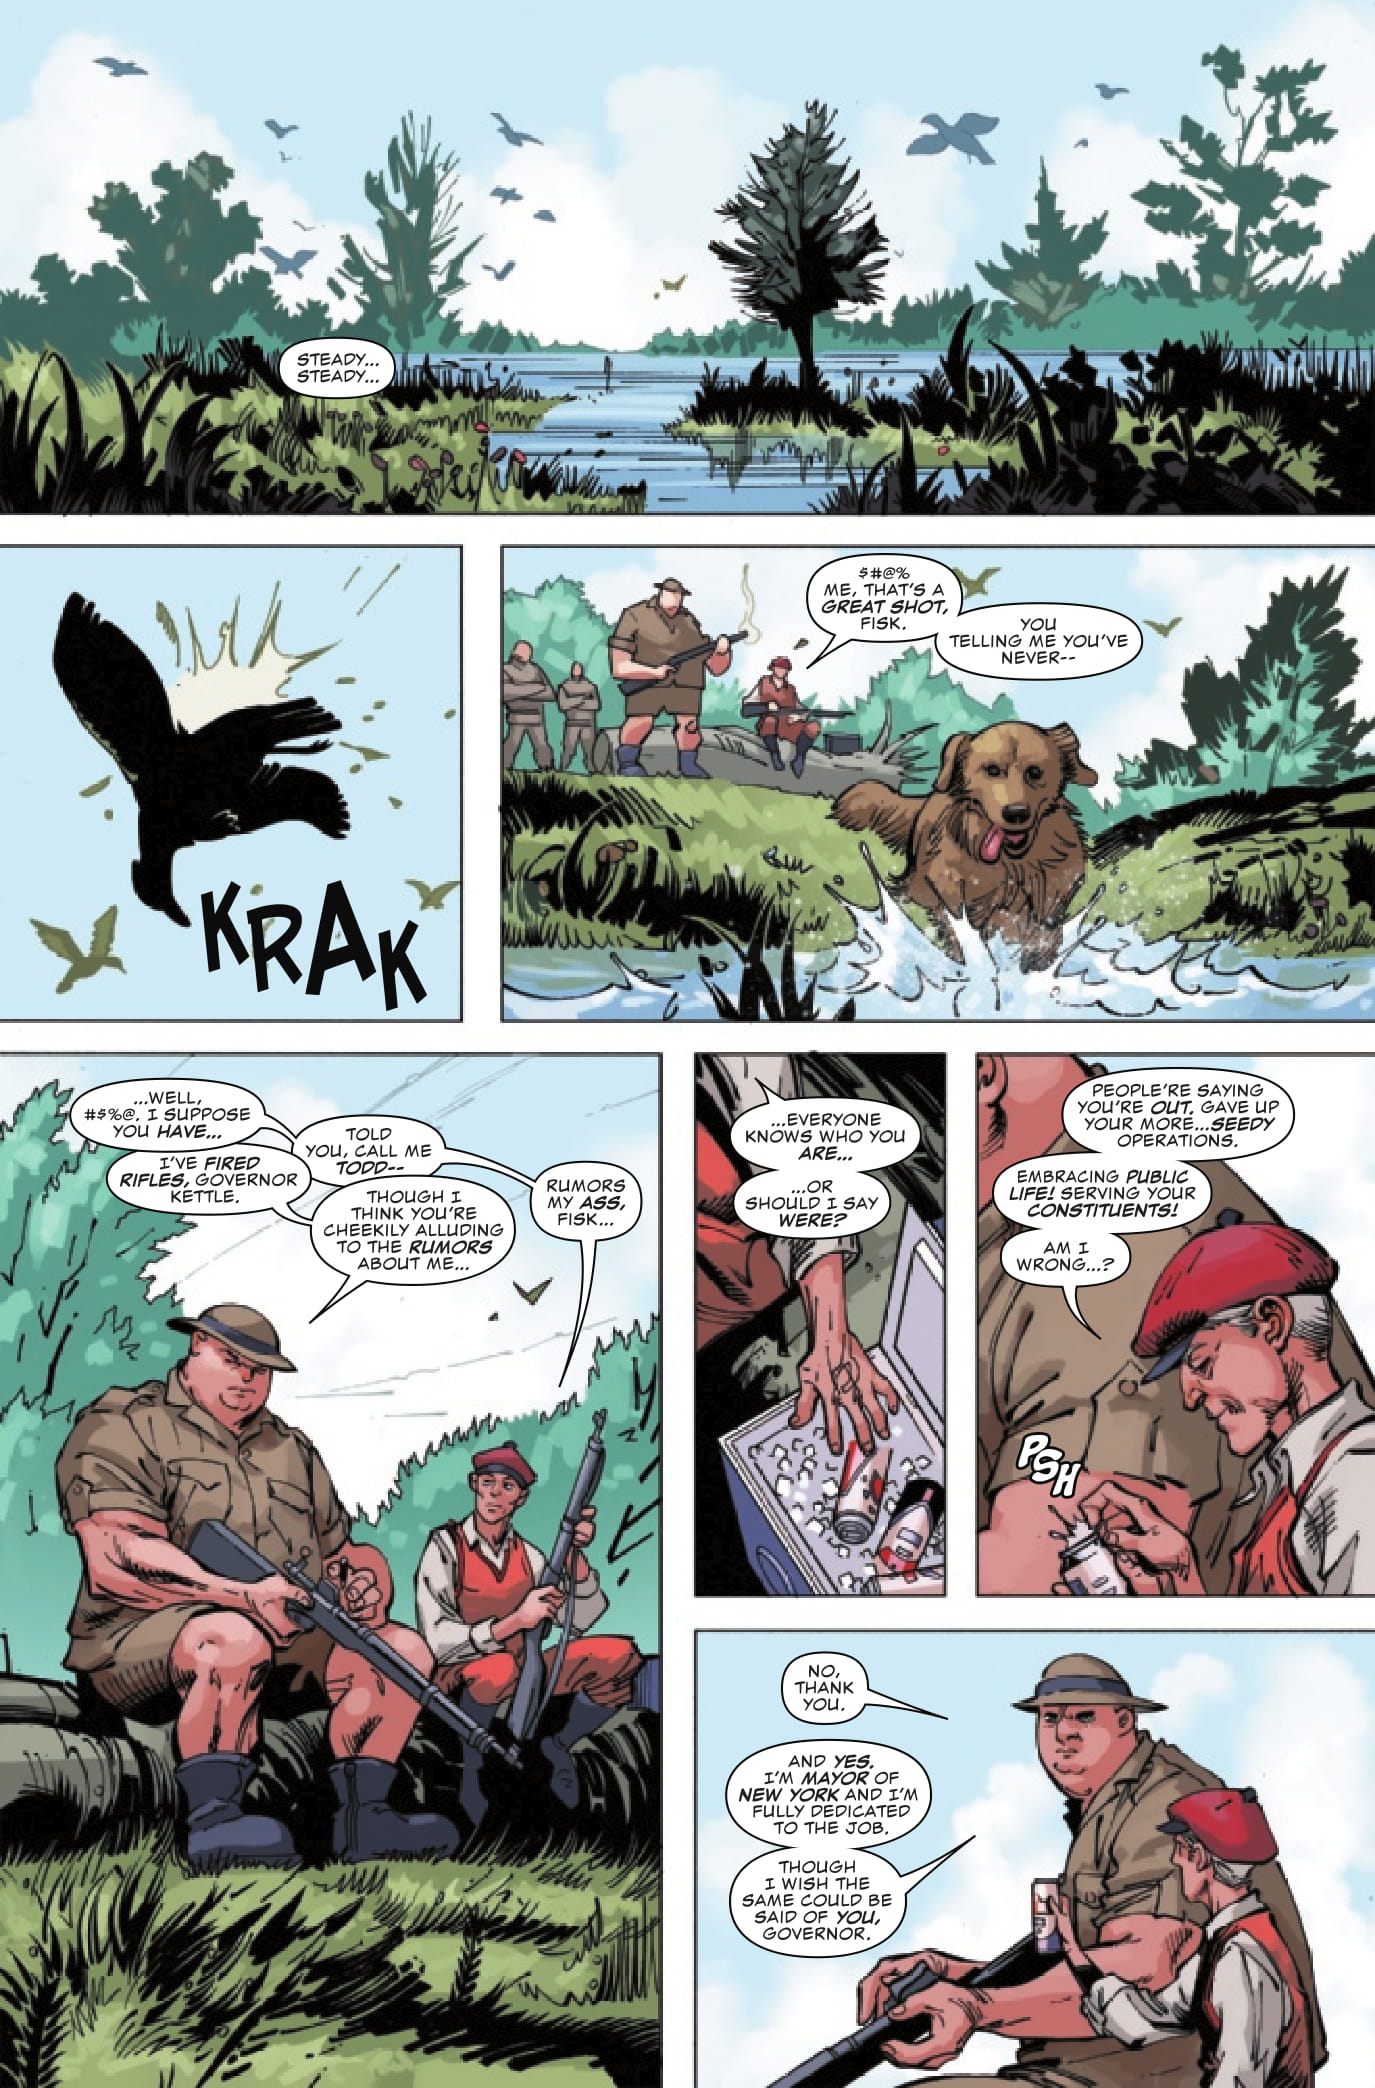 Daredevil #8 preview page 3